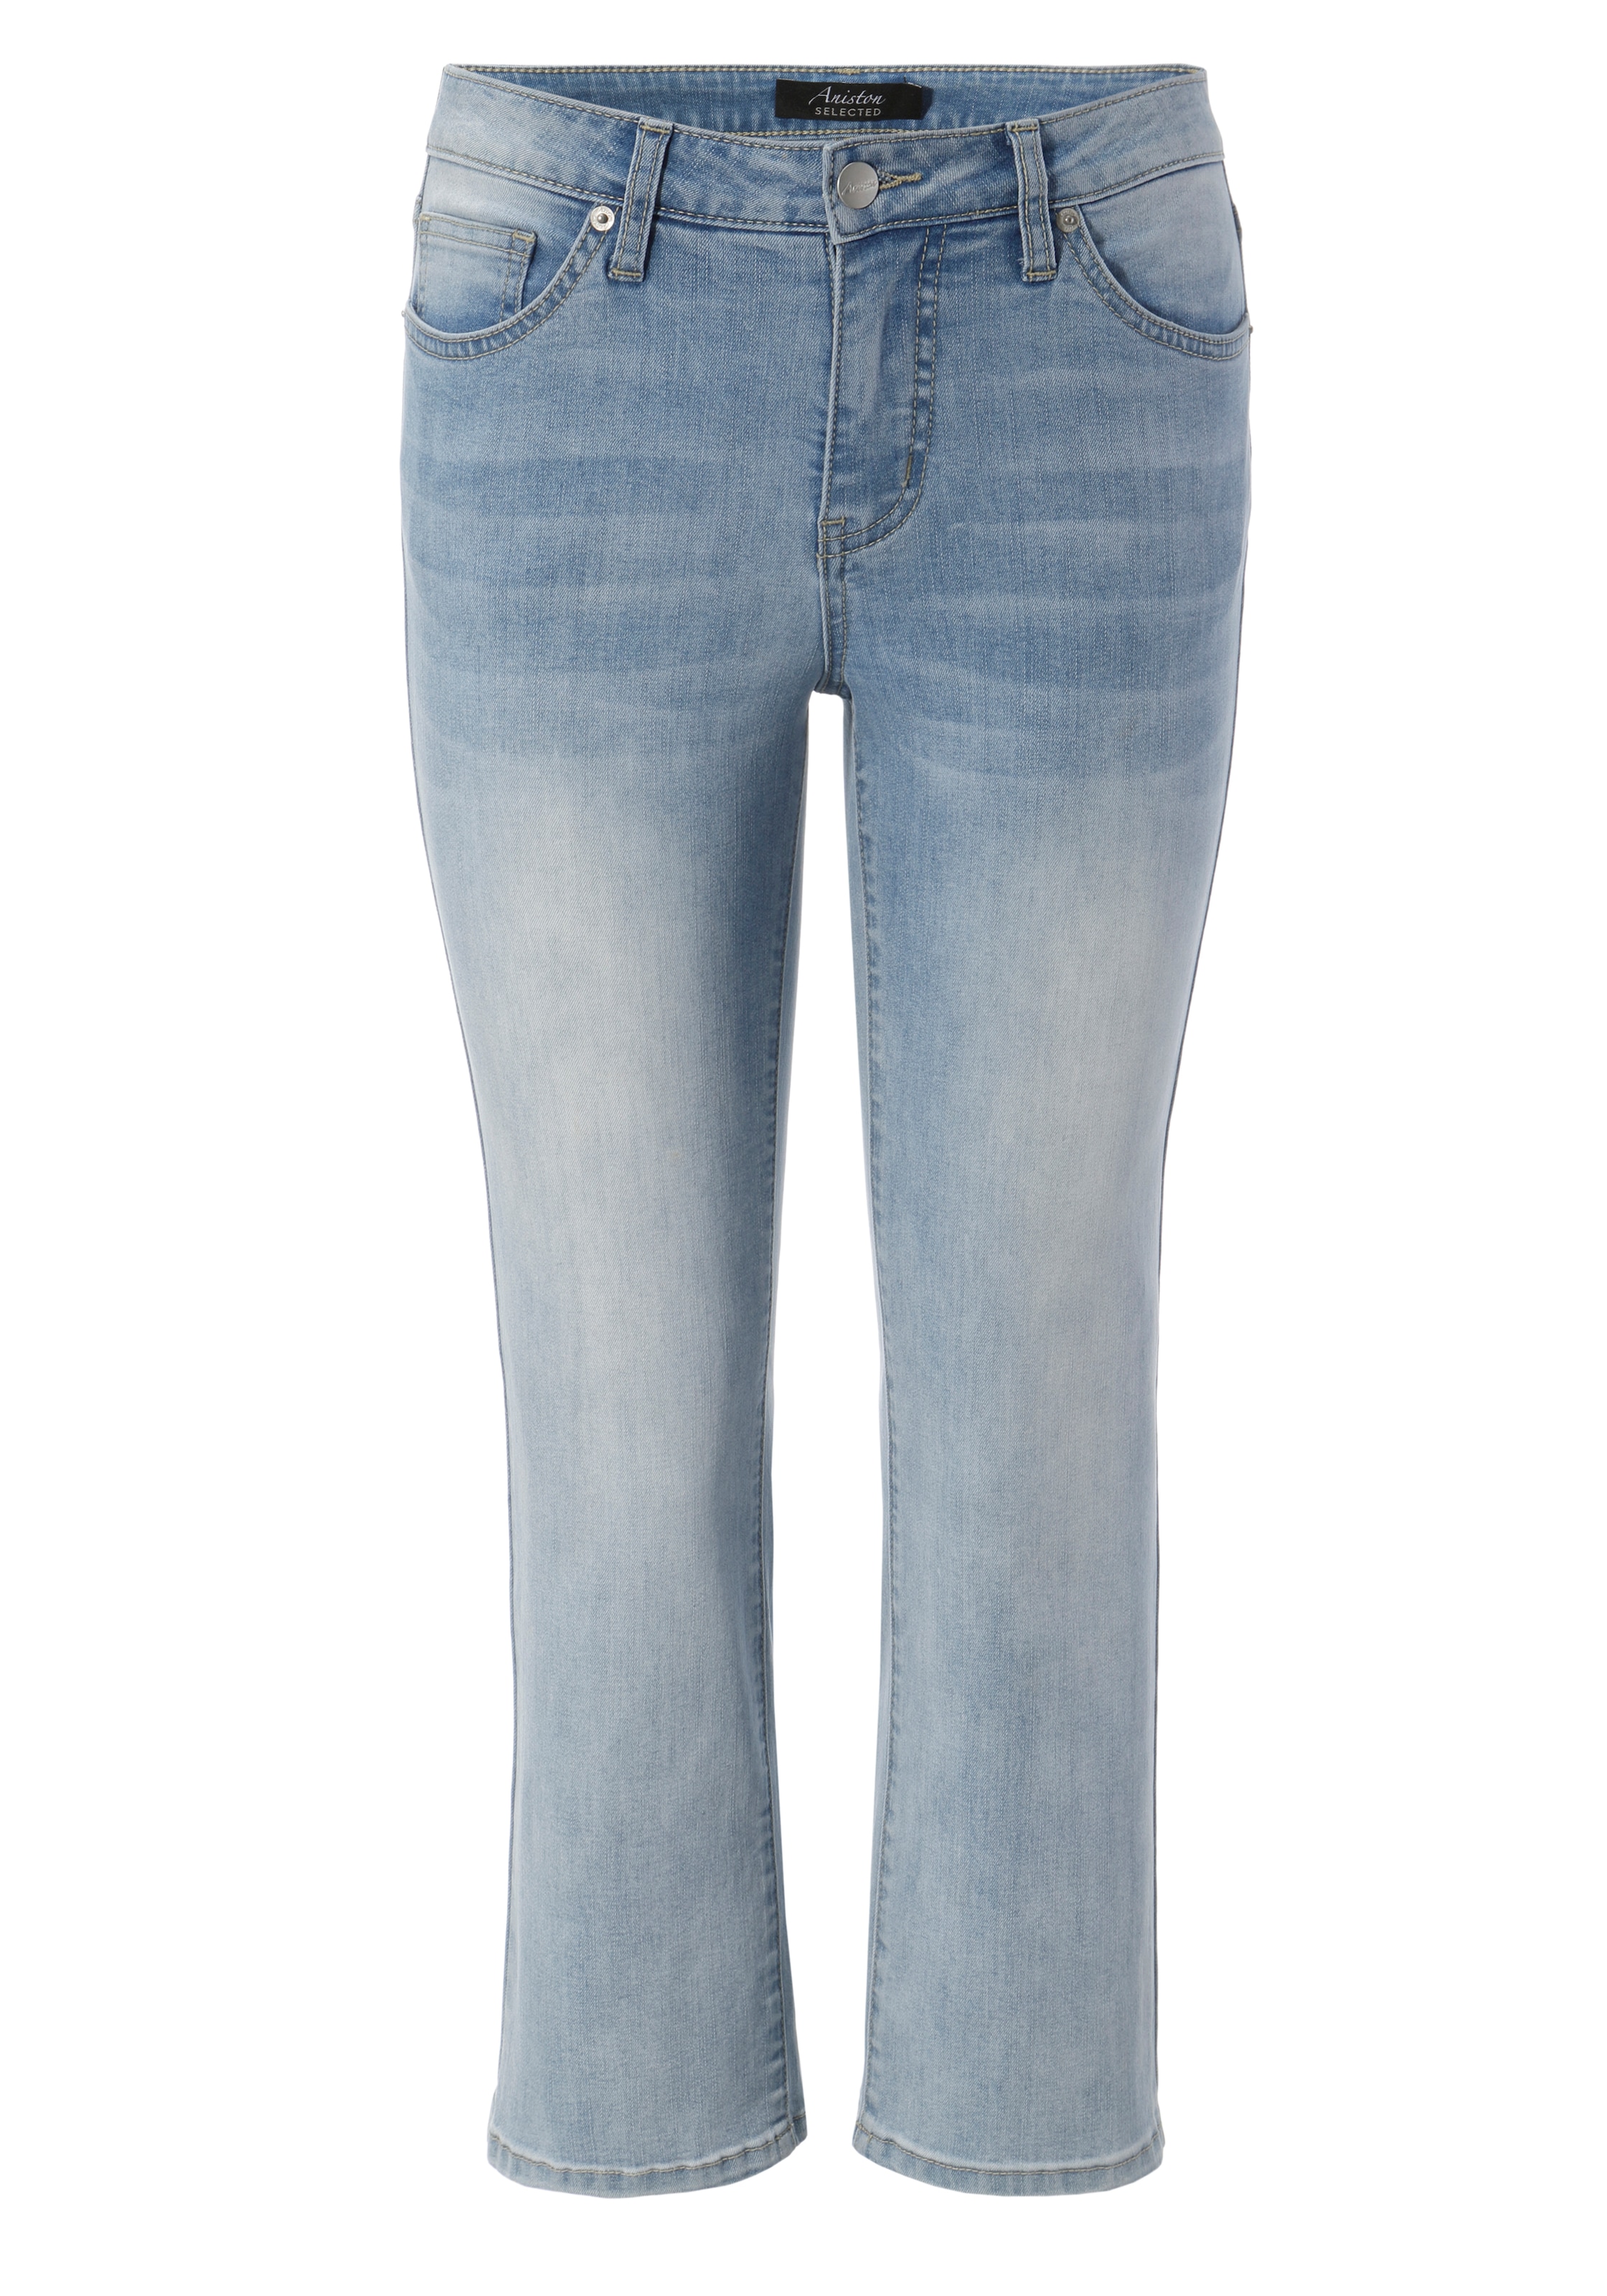 ♕ Aniston SELECTED Straight-Jeans, versandkostenfrei bestellen in Länge verkürzter cropped